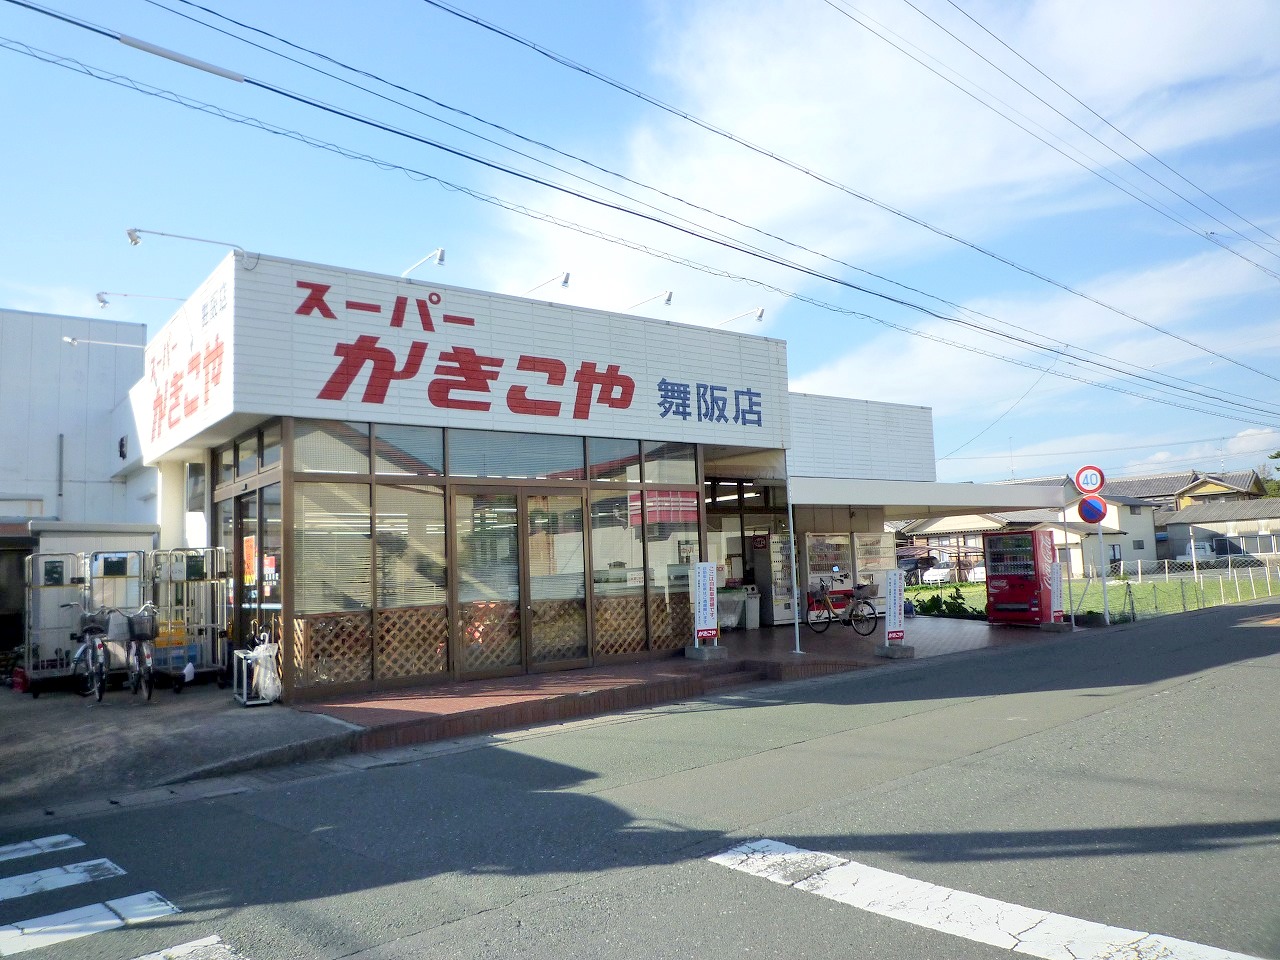 Supermarket. Kakiko and Maisaka store up to (super) 1500m